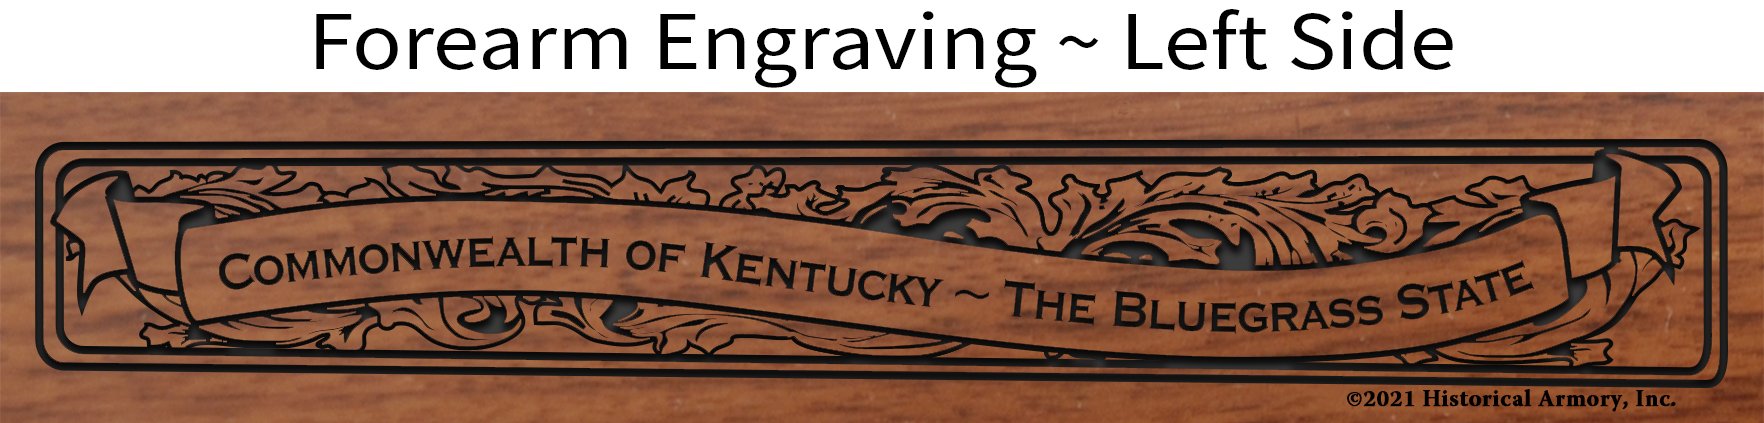 Kenton County Kentucky Engraved Rifle Forearm Left-Side